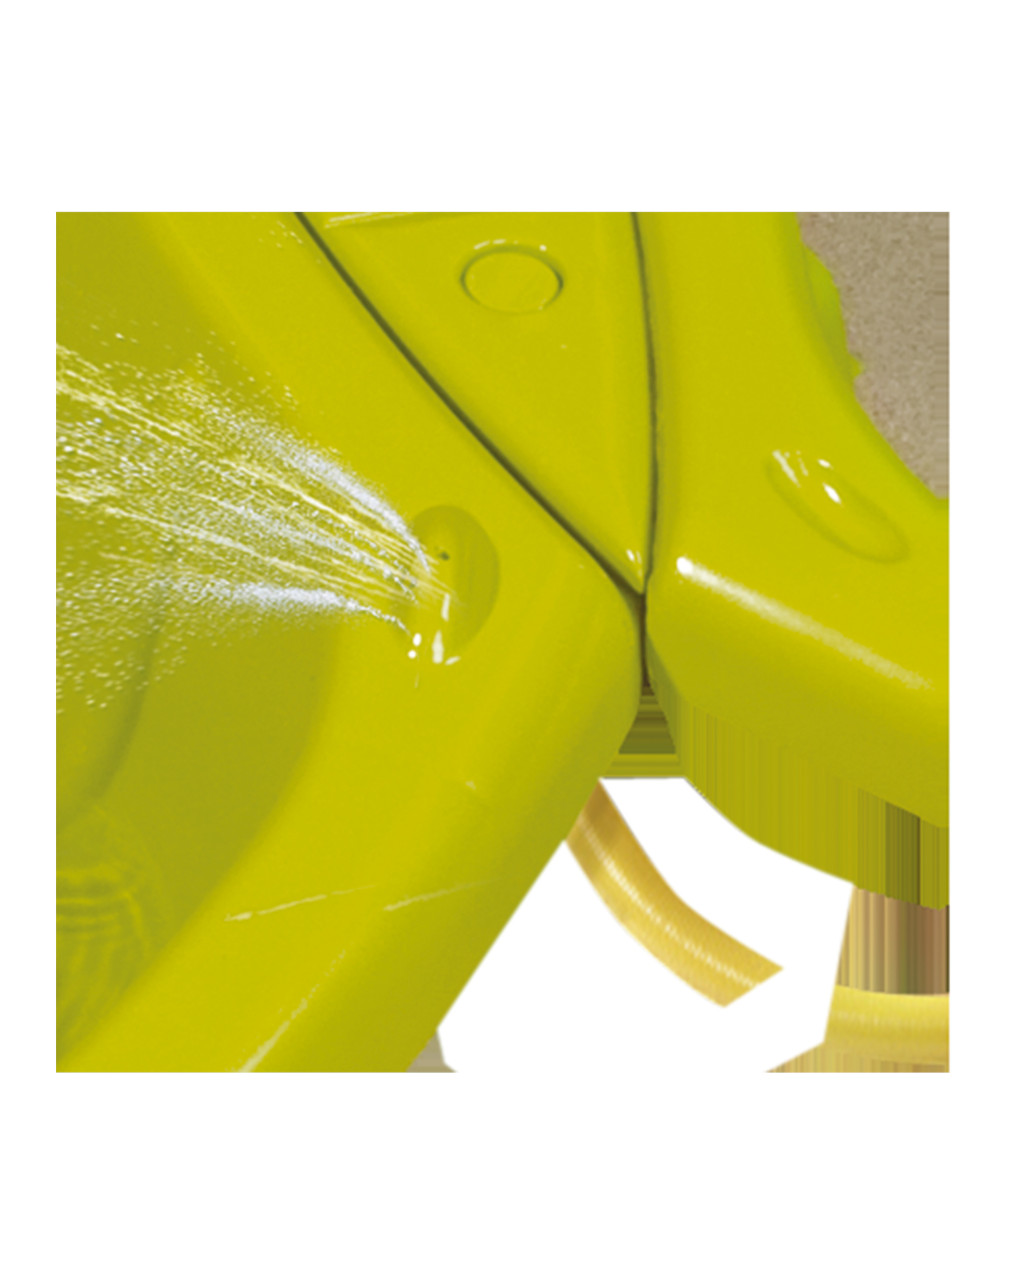 Smoby αμμοδόχος και πισίνα 2 σε 1 πεταλούδα πράσινη 167x111x18cm - Smoby